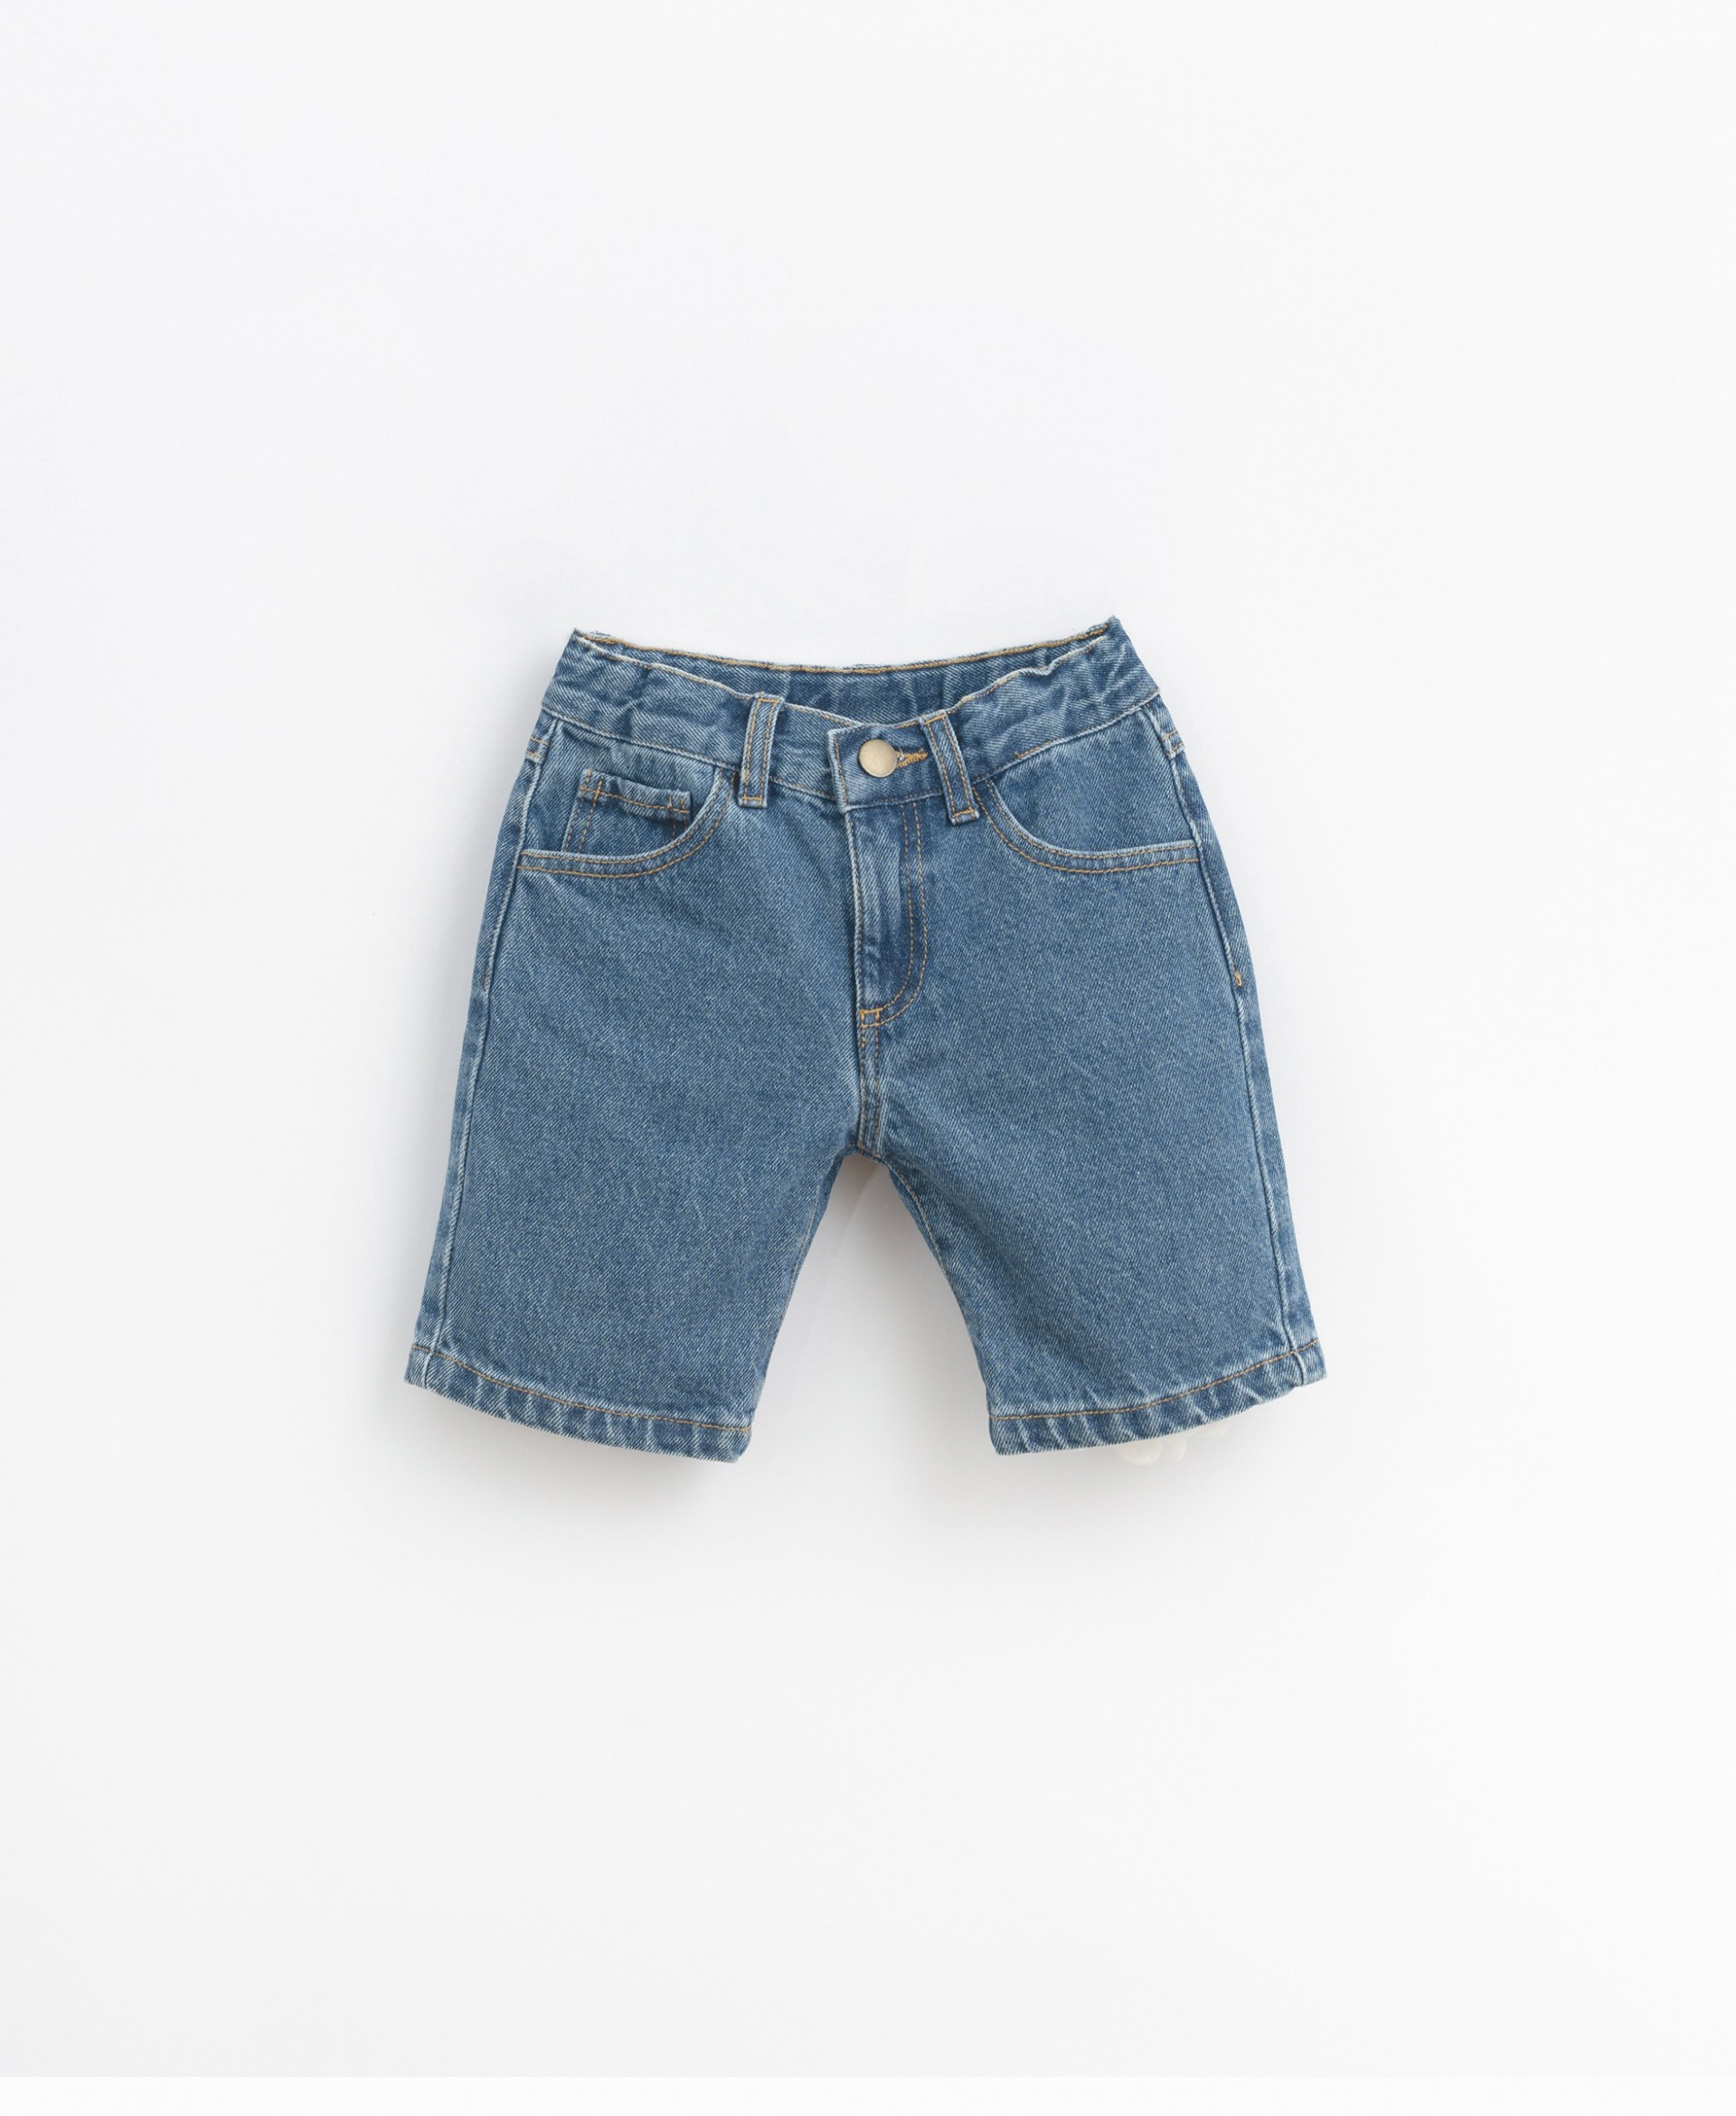 Shorts in cotton denim | Basketry